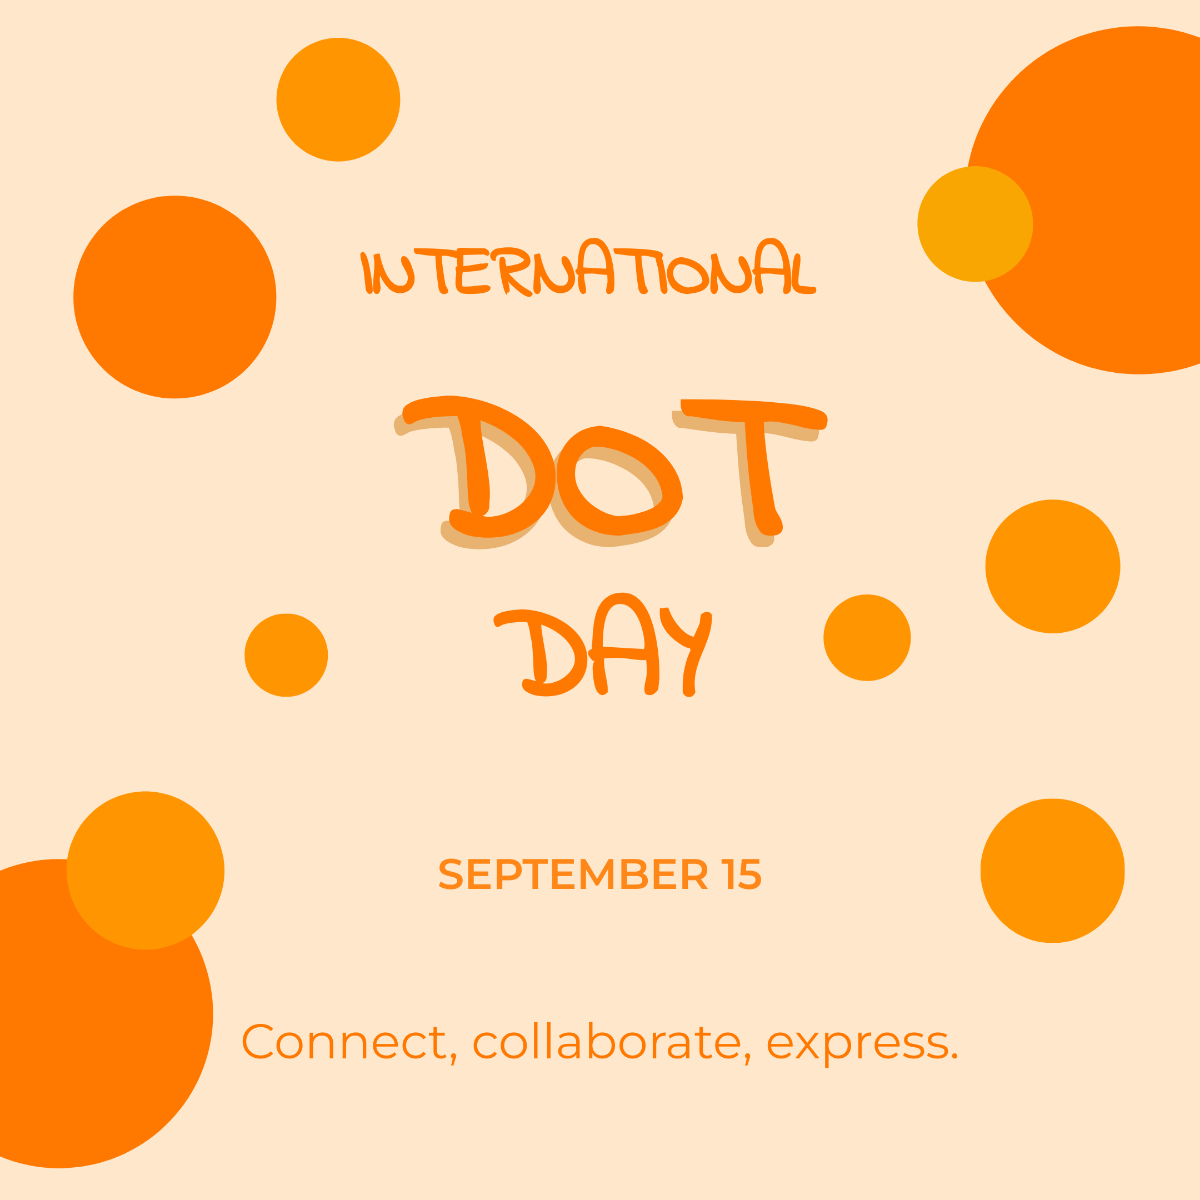 Free International Dot Day FB Post Template